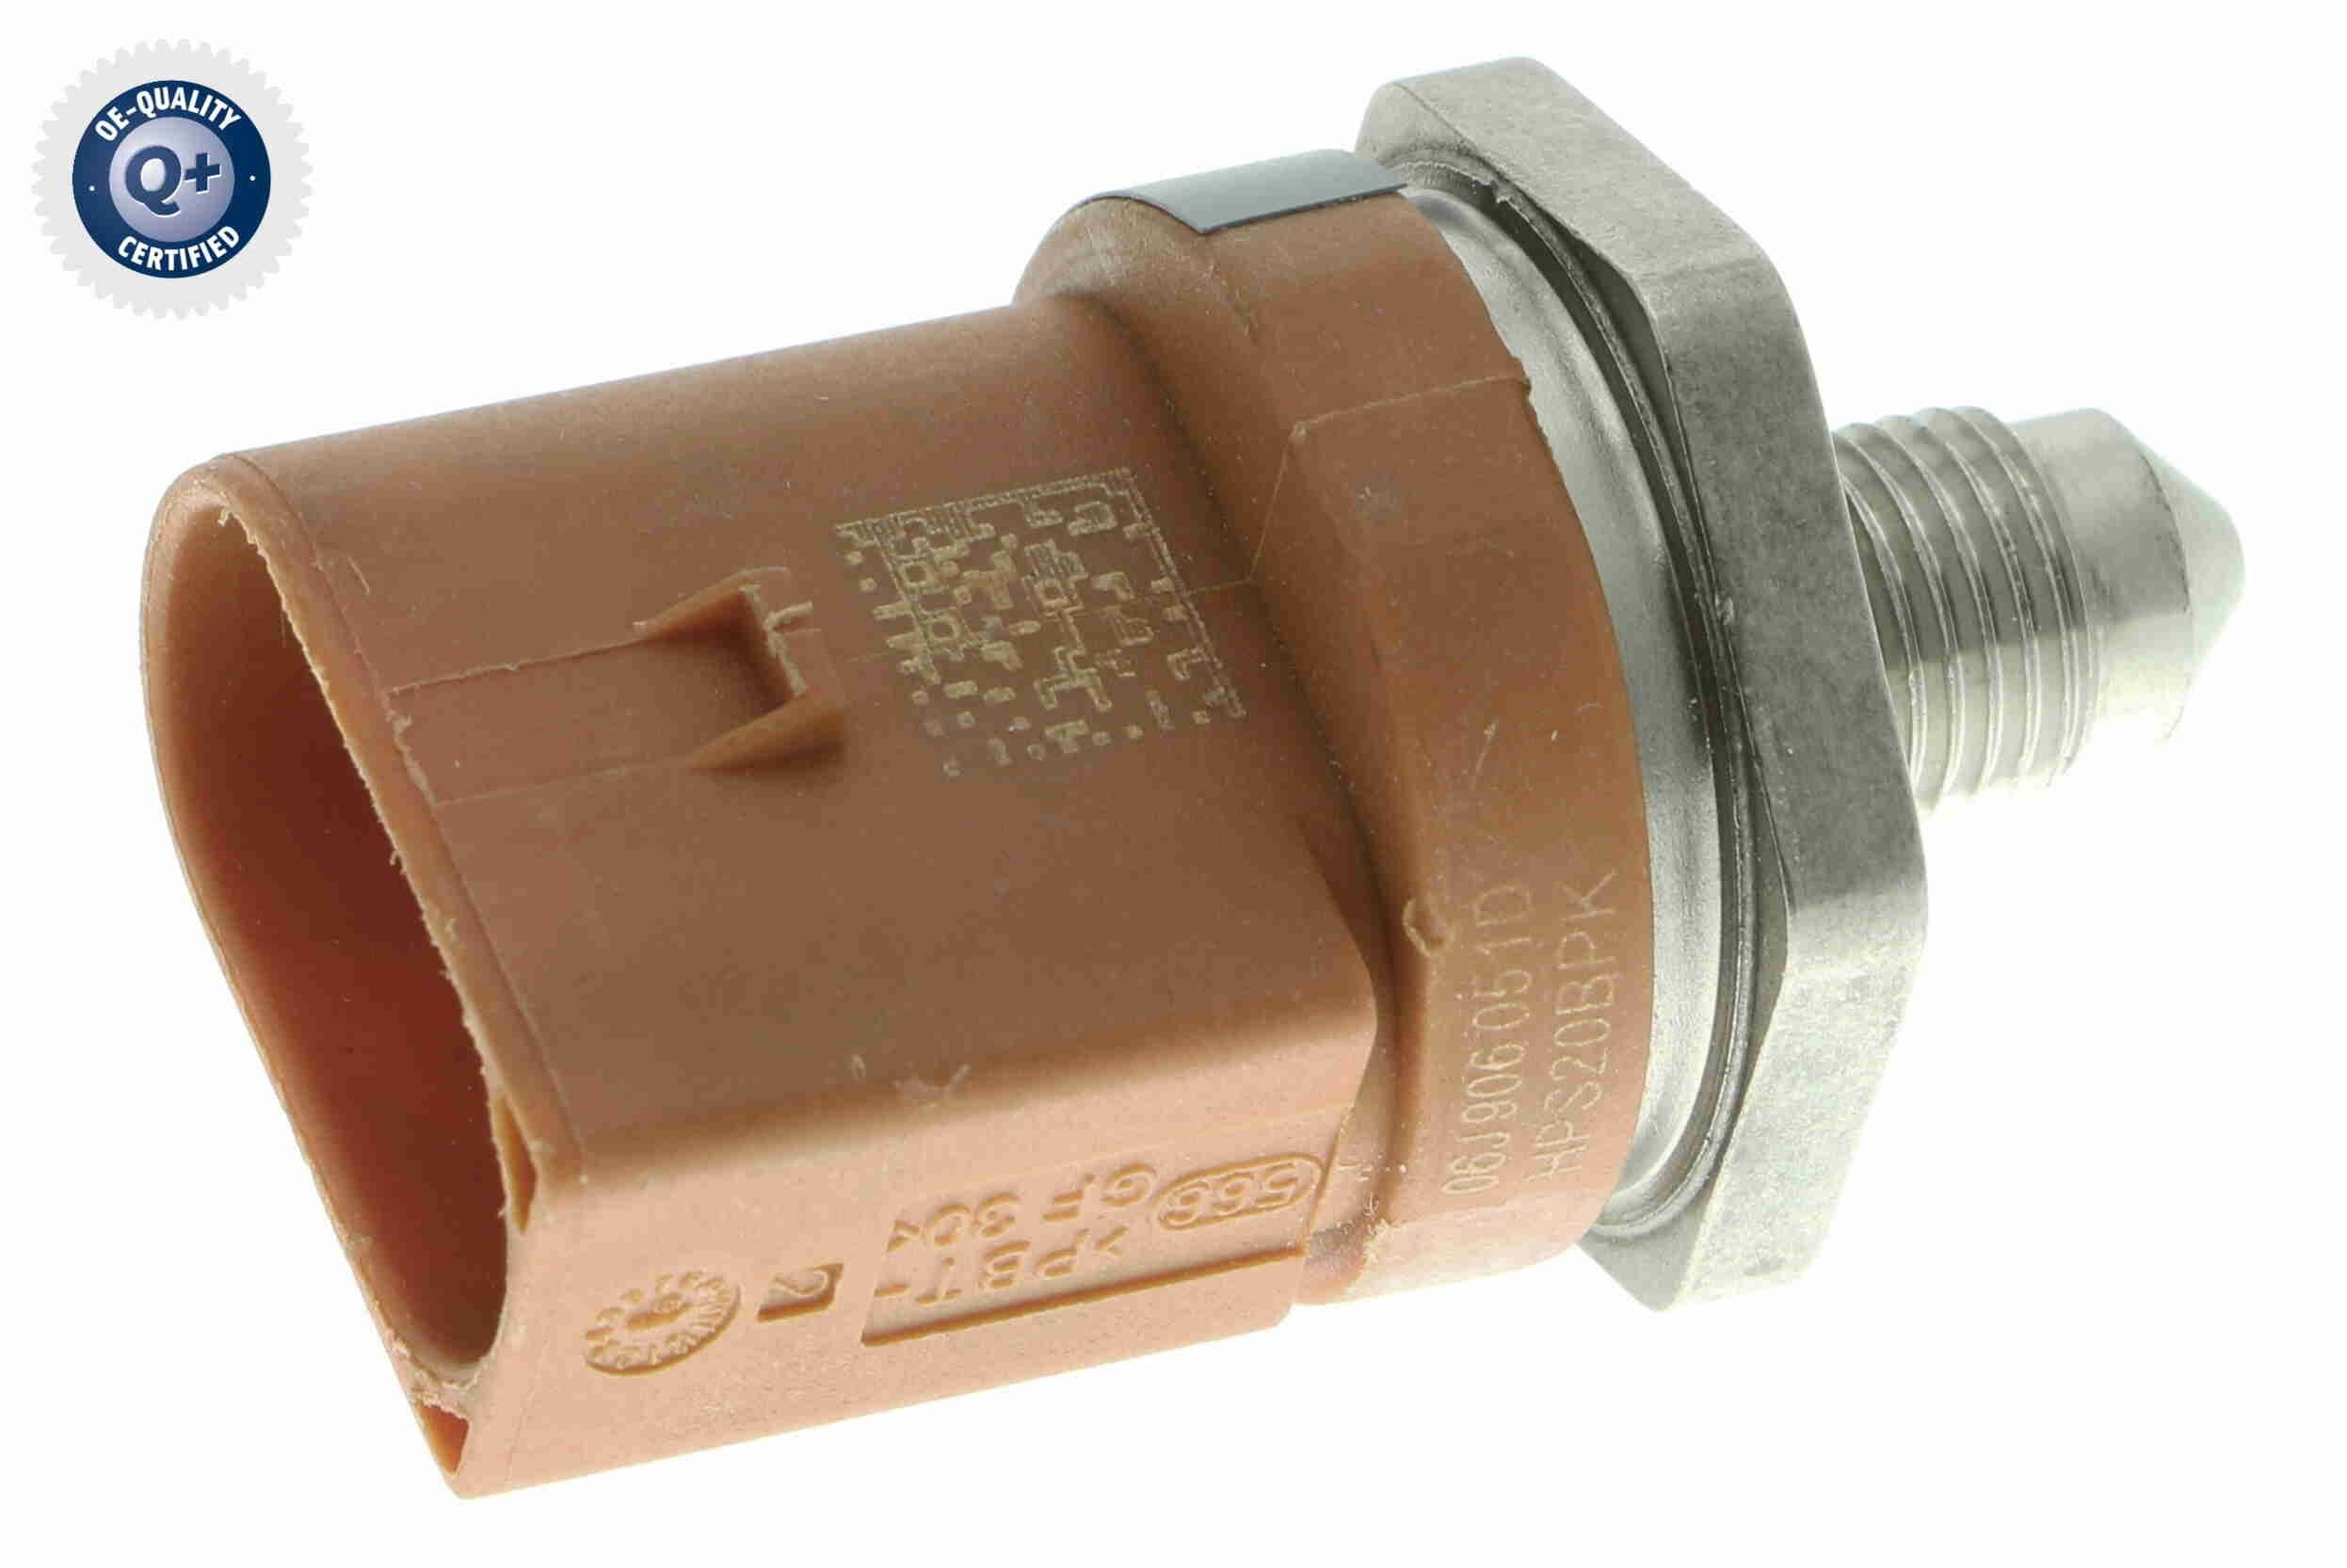 VEMO V10-72-1136-1 Fuel pressure sensor from fuel distributor to feed pipe, Q+, original equipment manufacturer quality